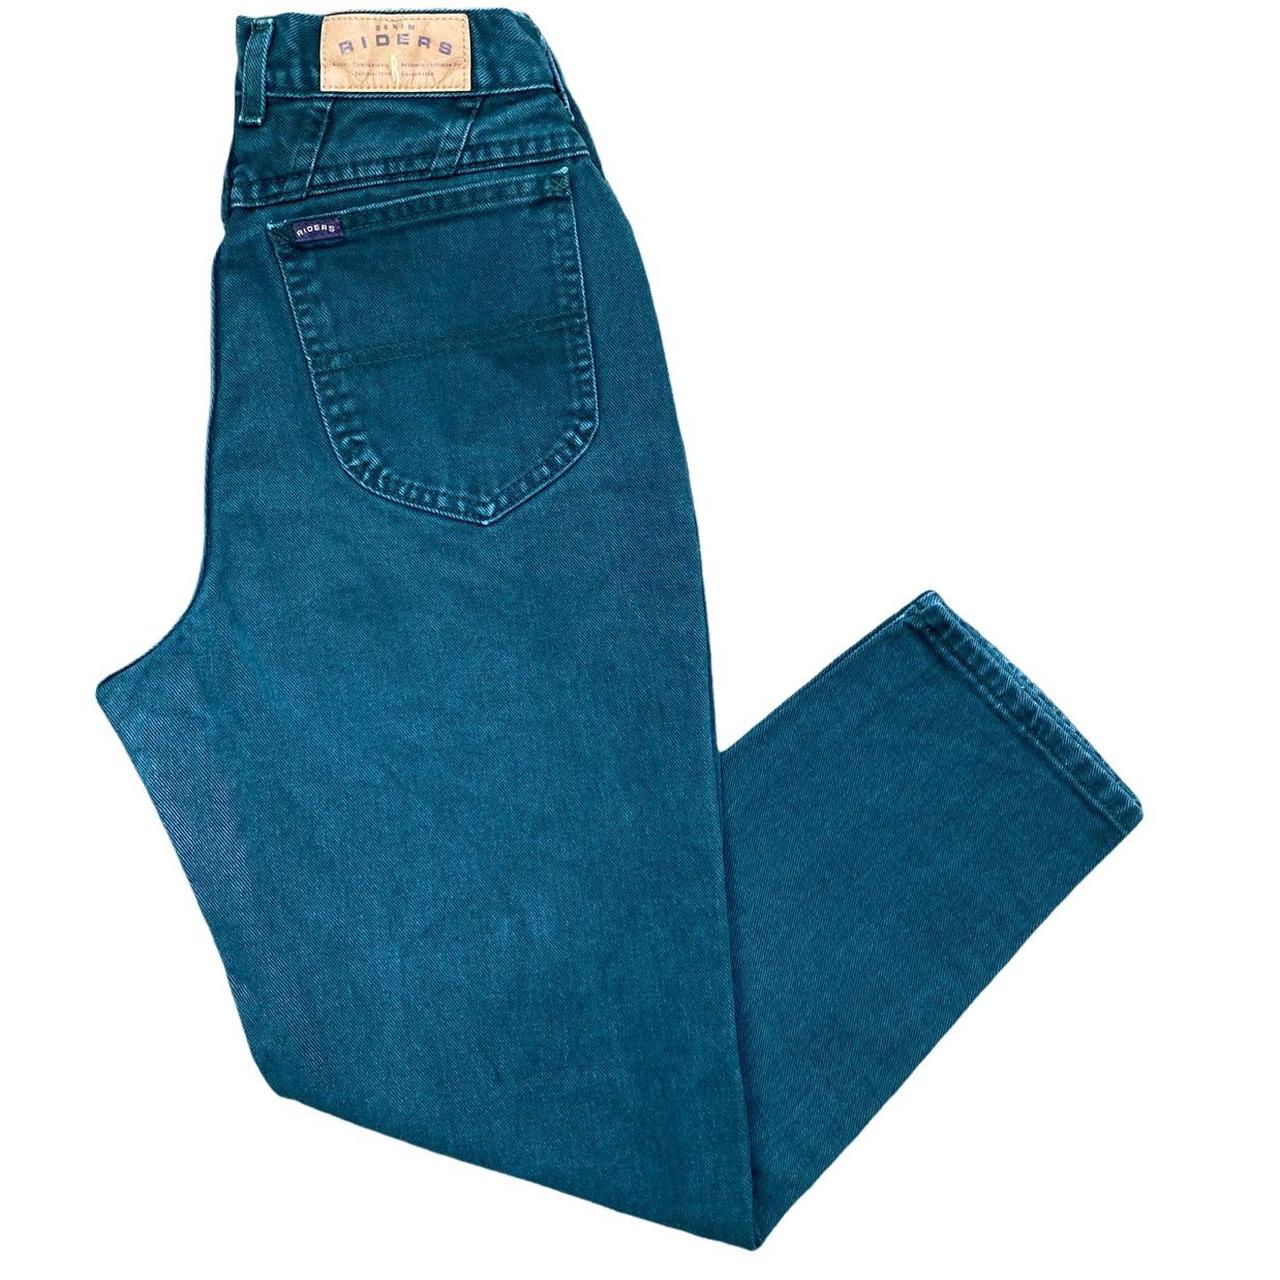 Lee Jean trousers dark blue Size 10 petite Good - Depop